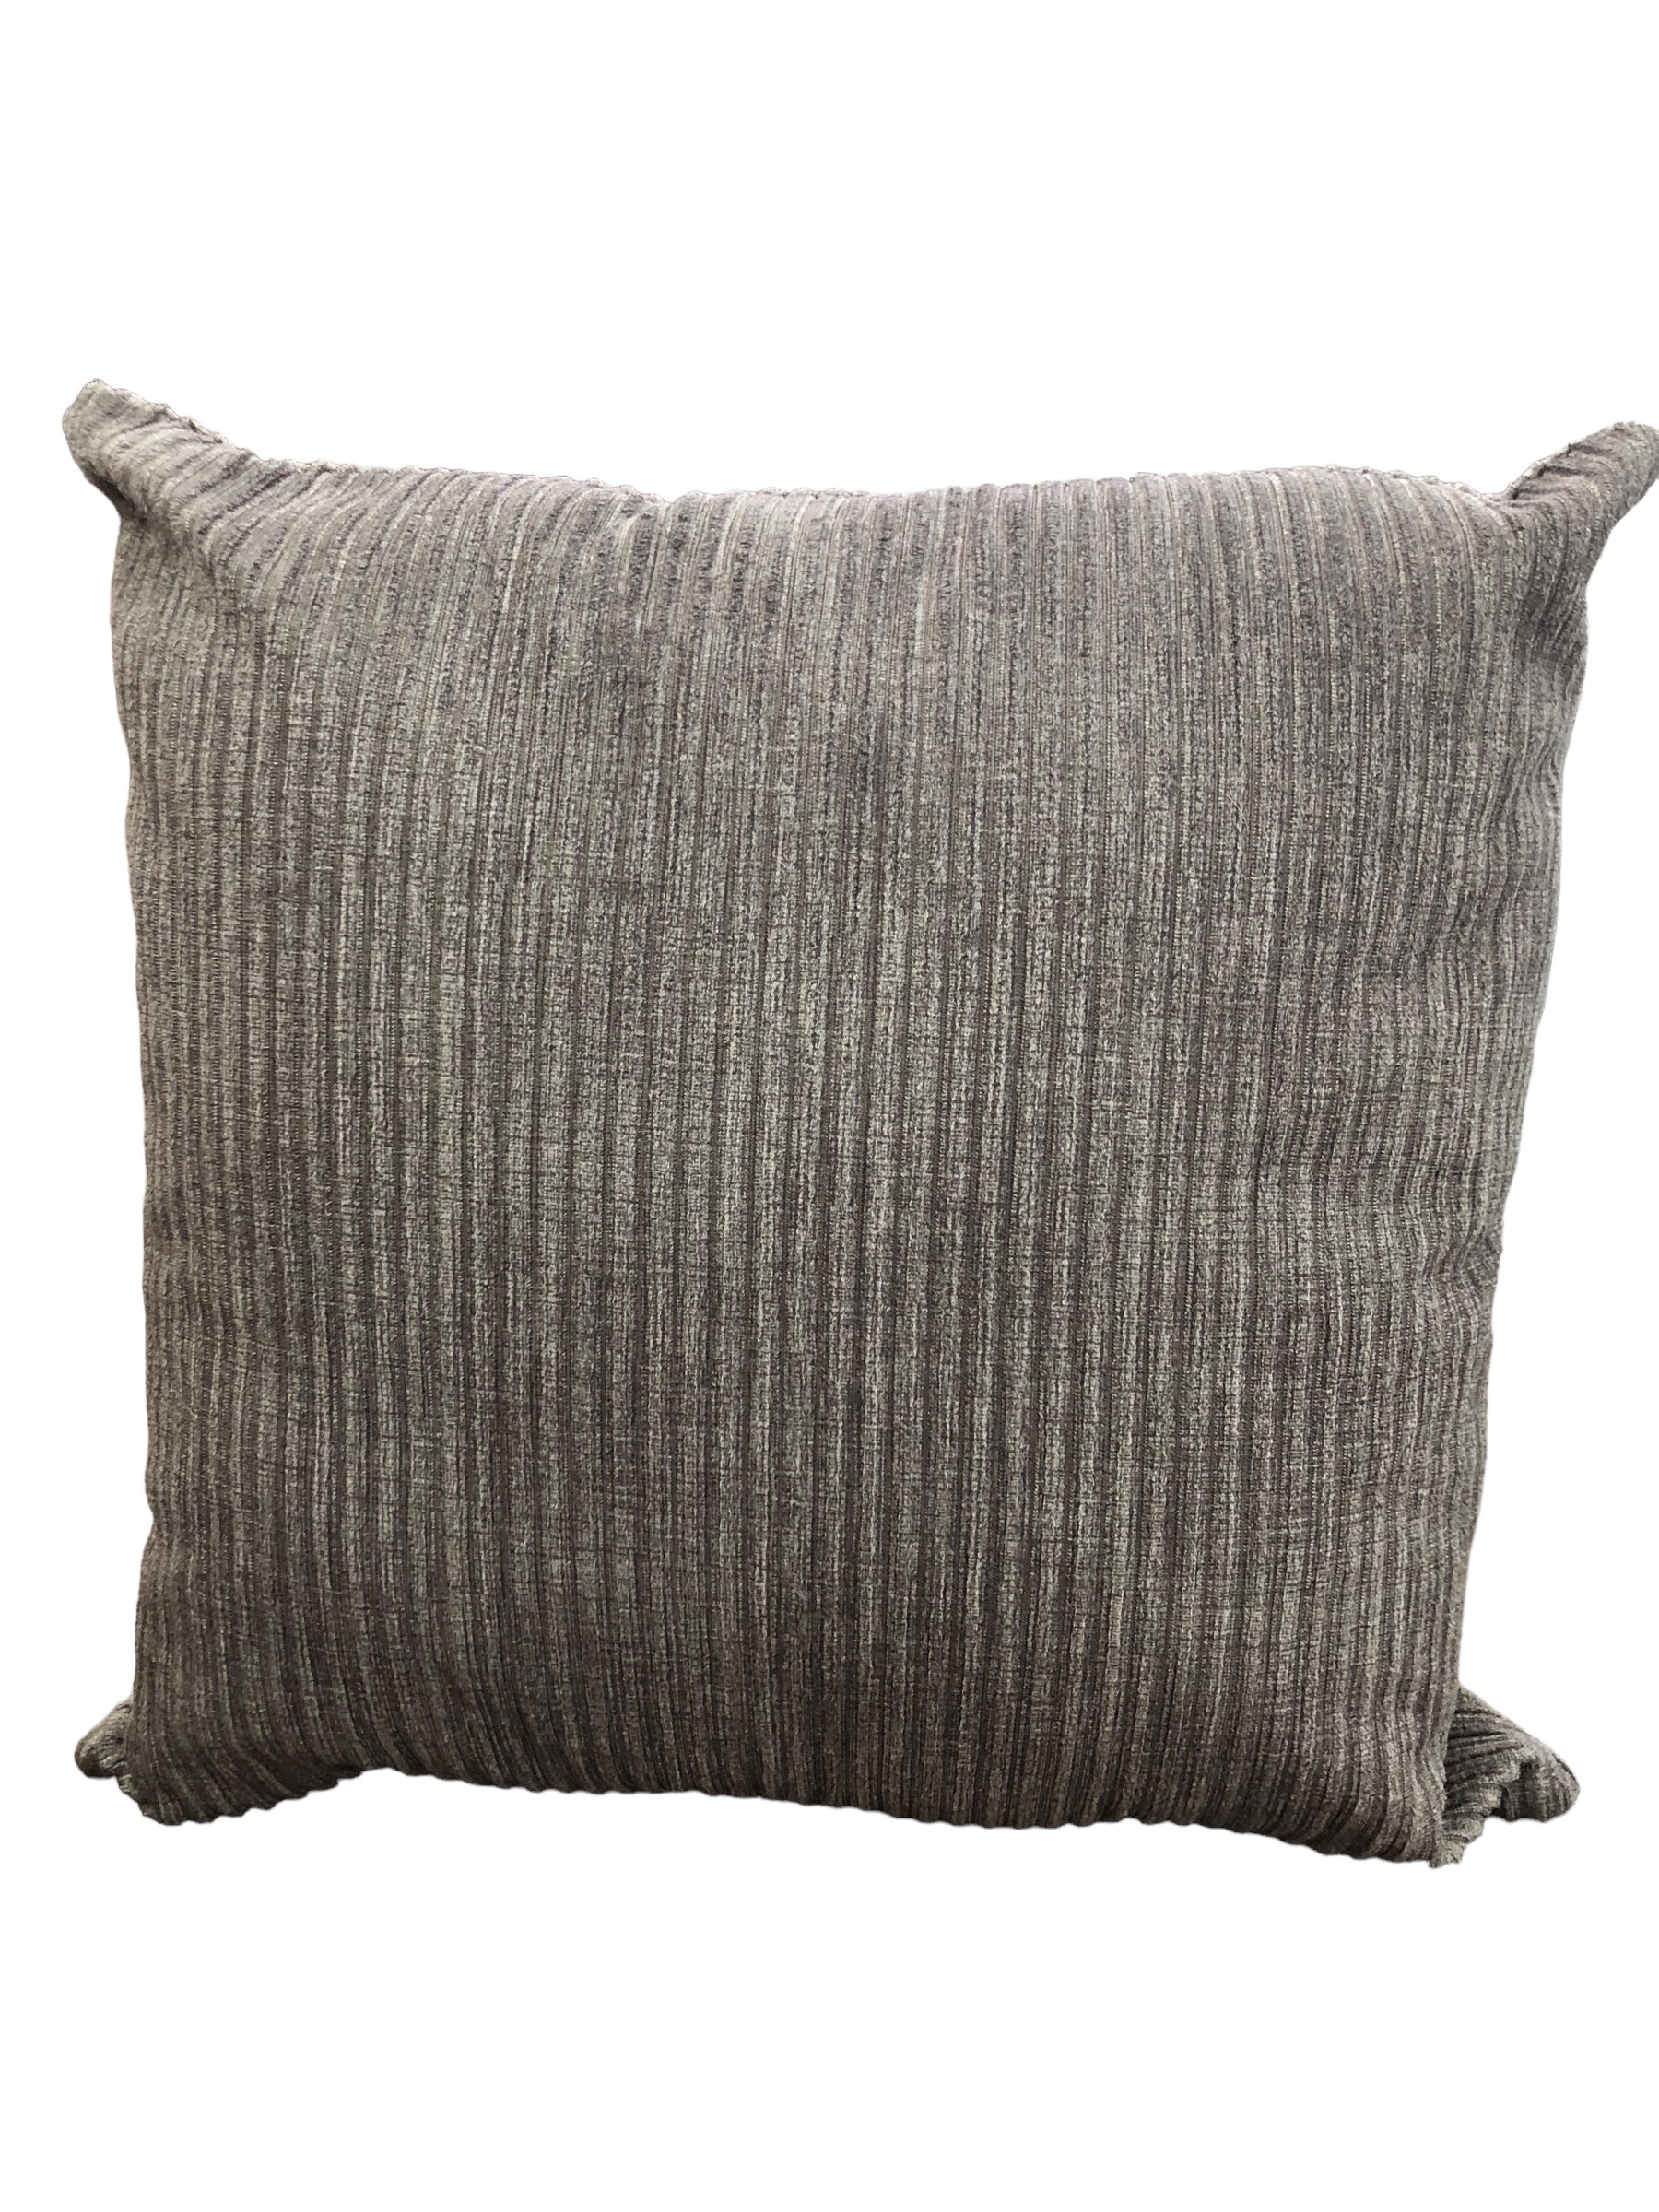 Brown textured accent pillow